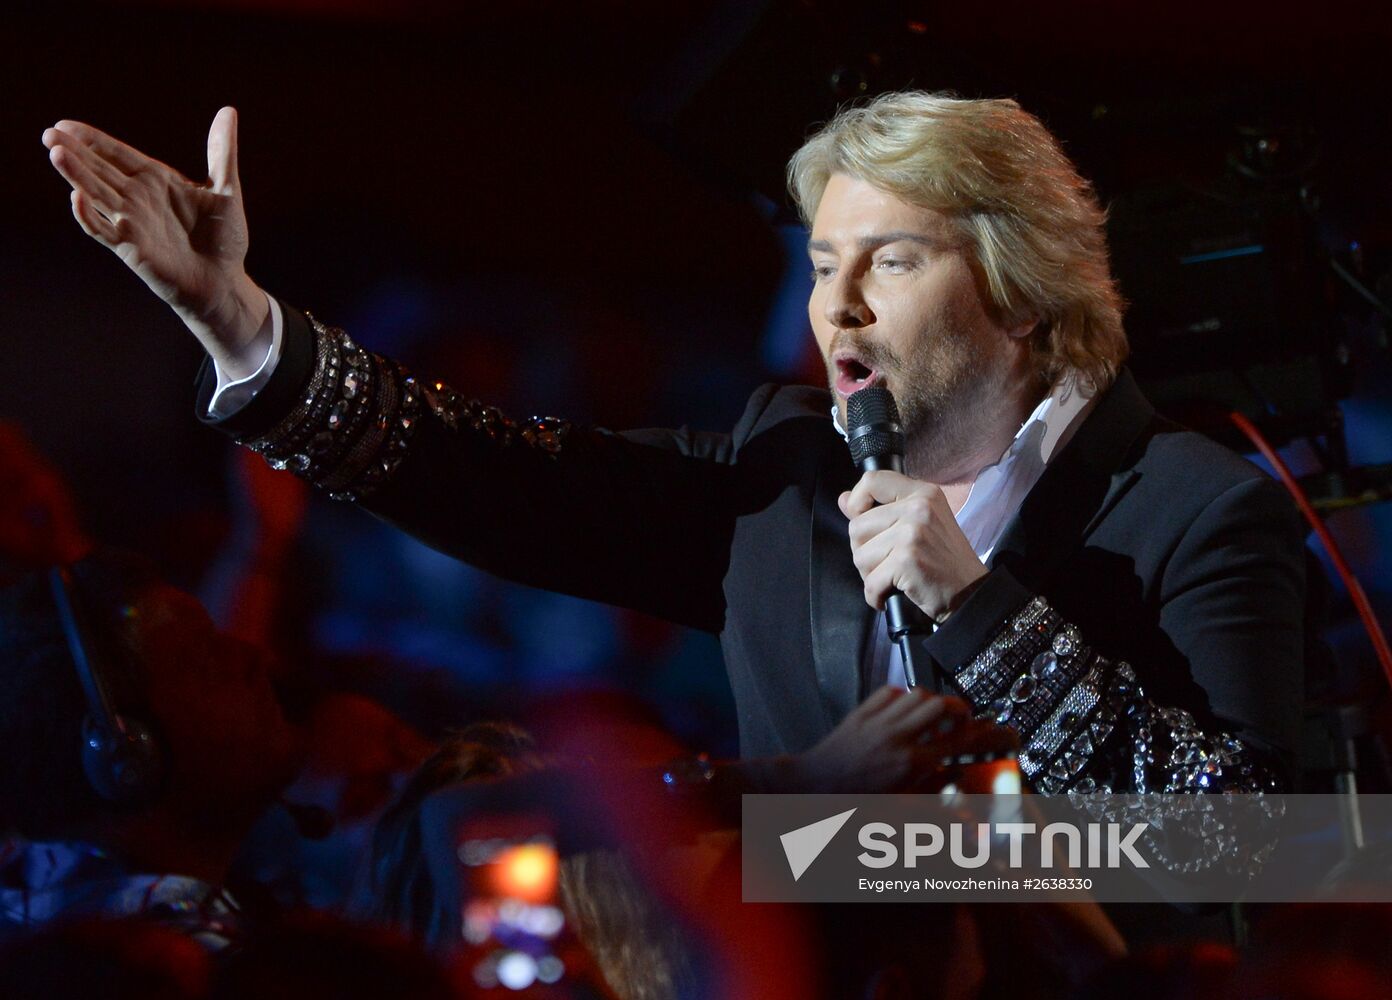 Concert by MUZ-TV 2015 Awards nominees and winners at Grand Kremlin Palace